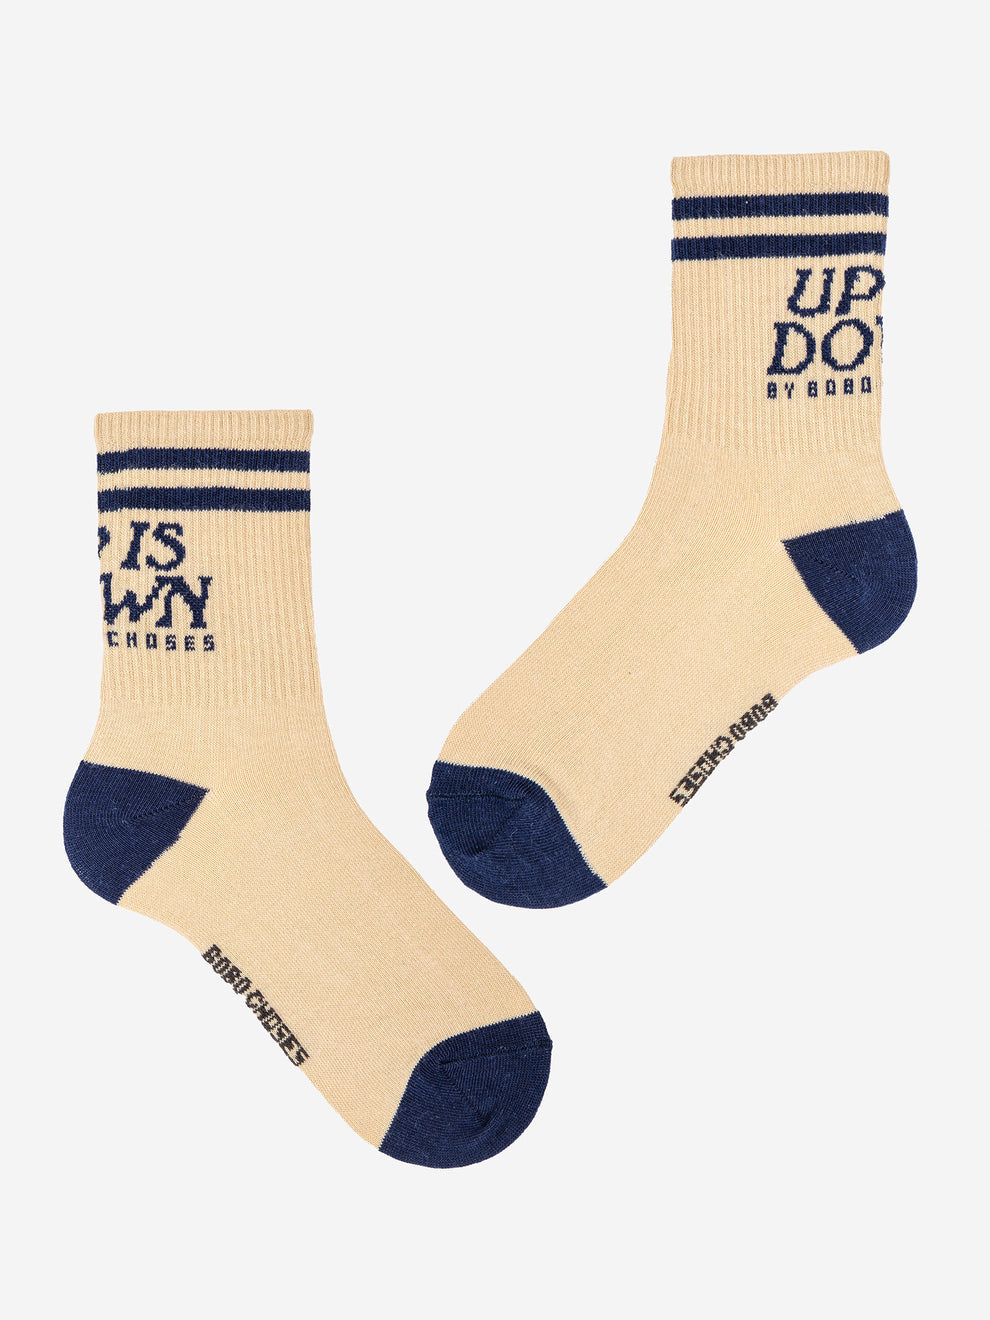 Up Is Down Short Socks - 23/25, 26/28